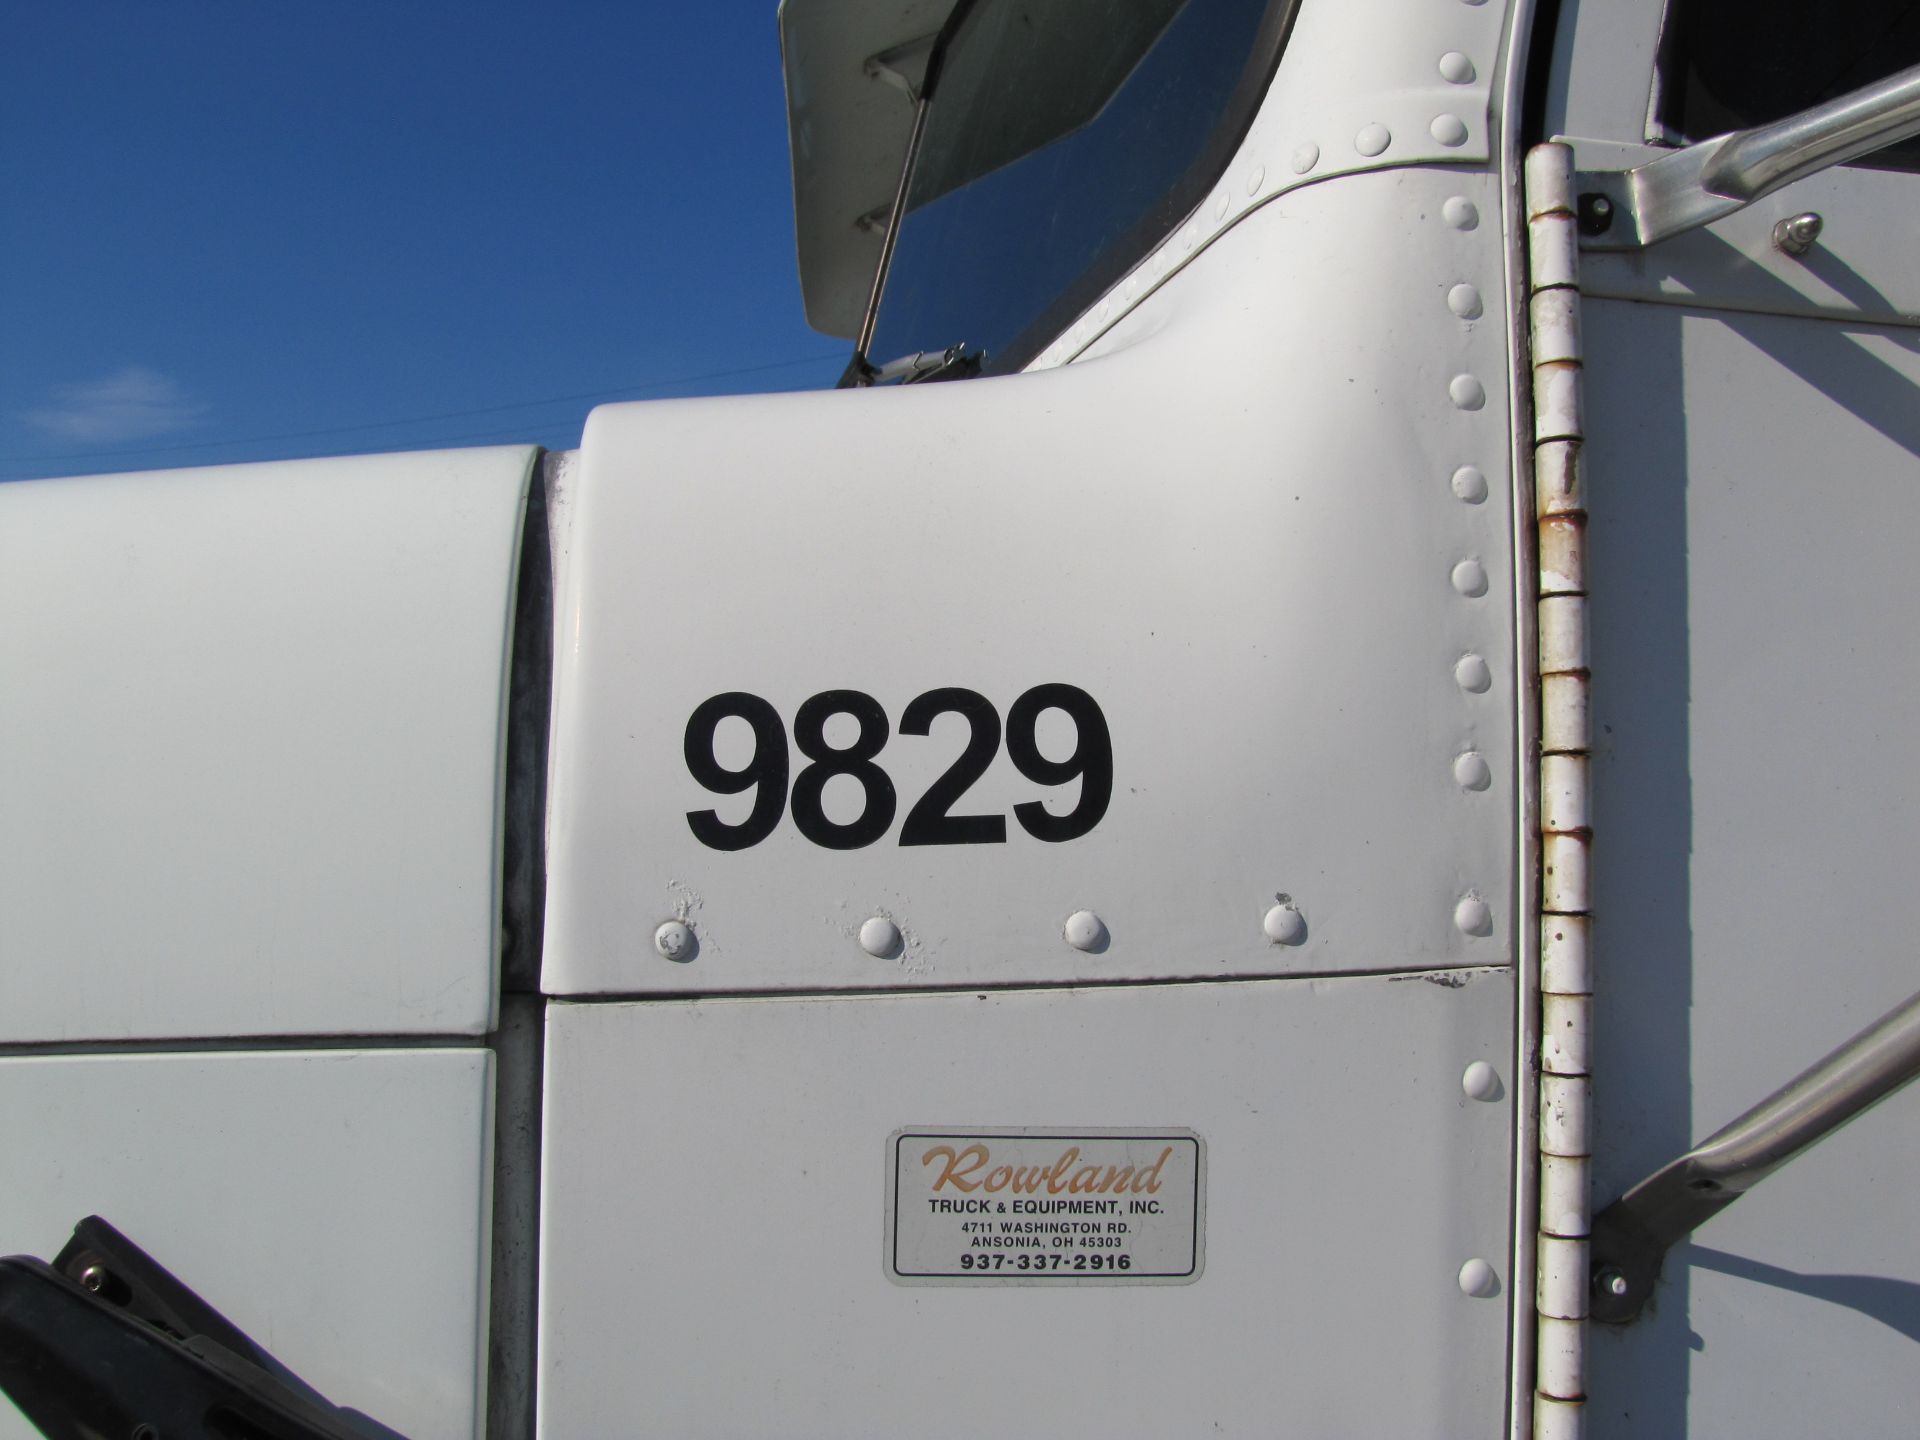 1998 Freightliner, day cab, air ride, Cummins M-11, Eaton 9-speed trans, 168” wheelbase, 523,830 mi - Image 36 of 51